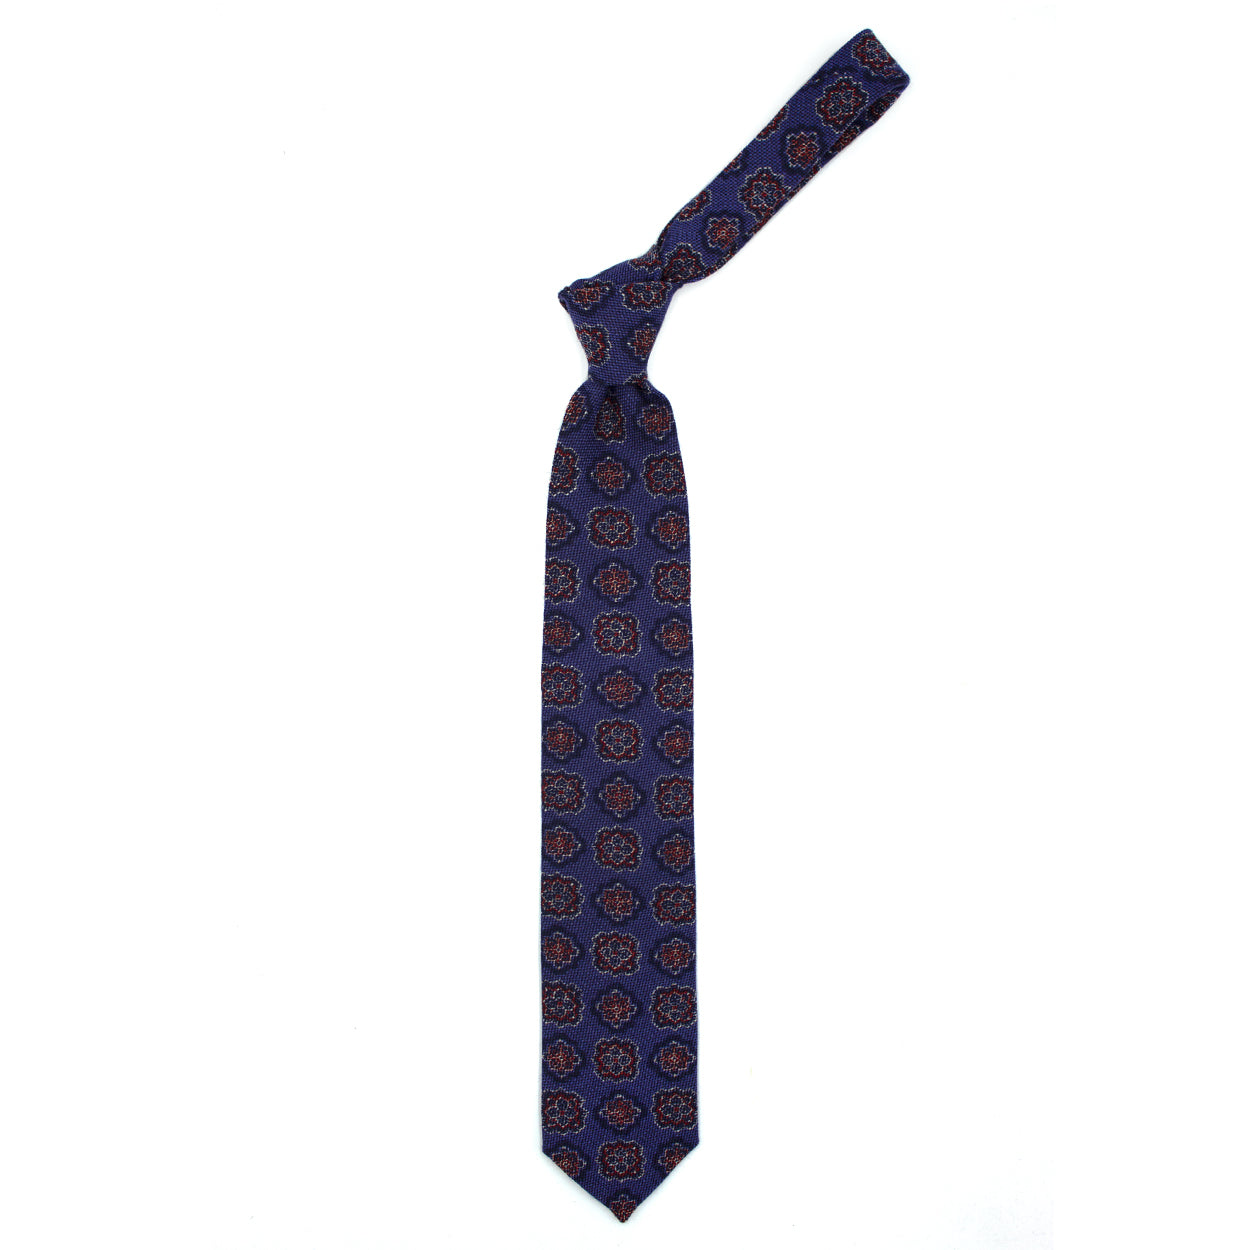 Cravatta blu con medaglioni blu e rossi